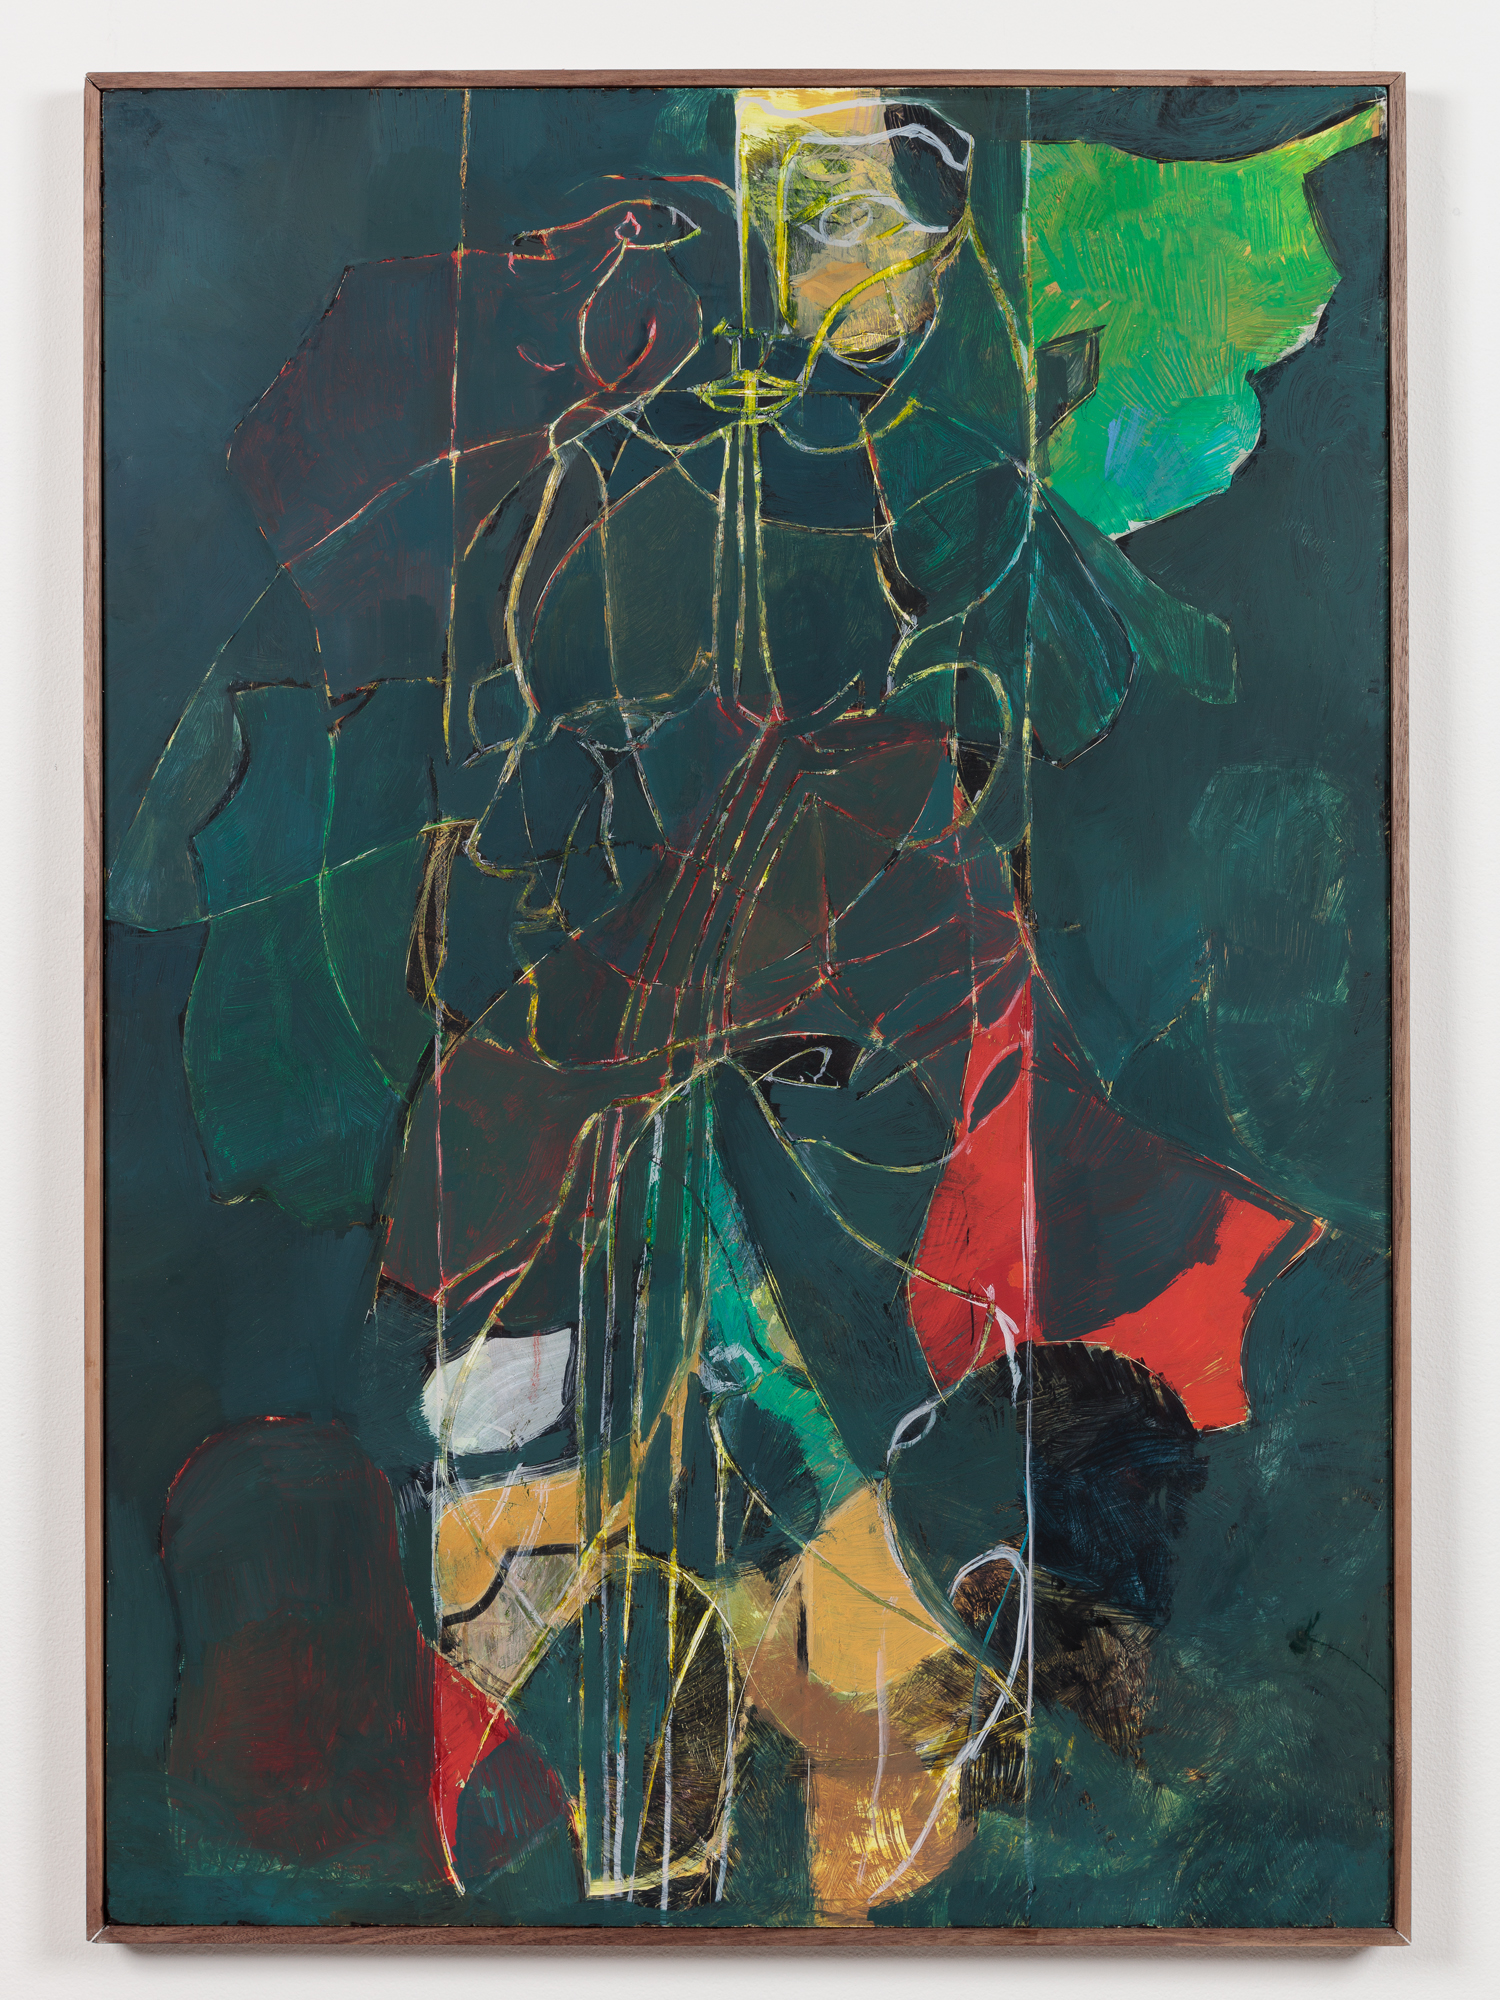 Nicholas Byrne, Screen drawing,, 2015, oil on gessoed panel with artists frame, 100 x 70 x 2 cm, 39 3/8 x 27 1/2 x 3/4 ins. Nicholas Byrne